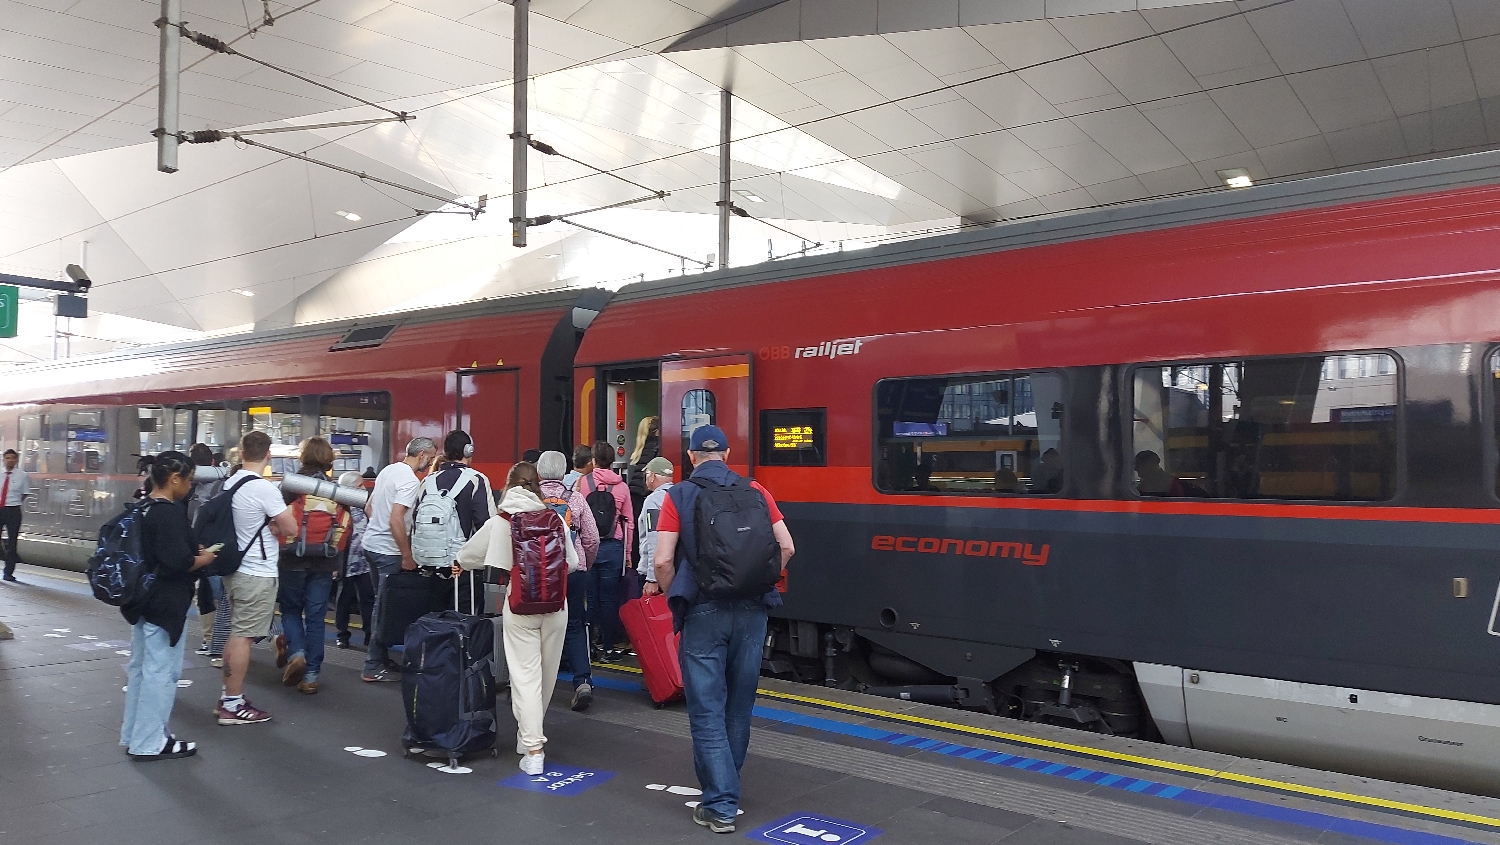 Camino Primitivo, Bécs, felszállás a reptéri vonatra